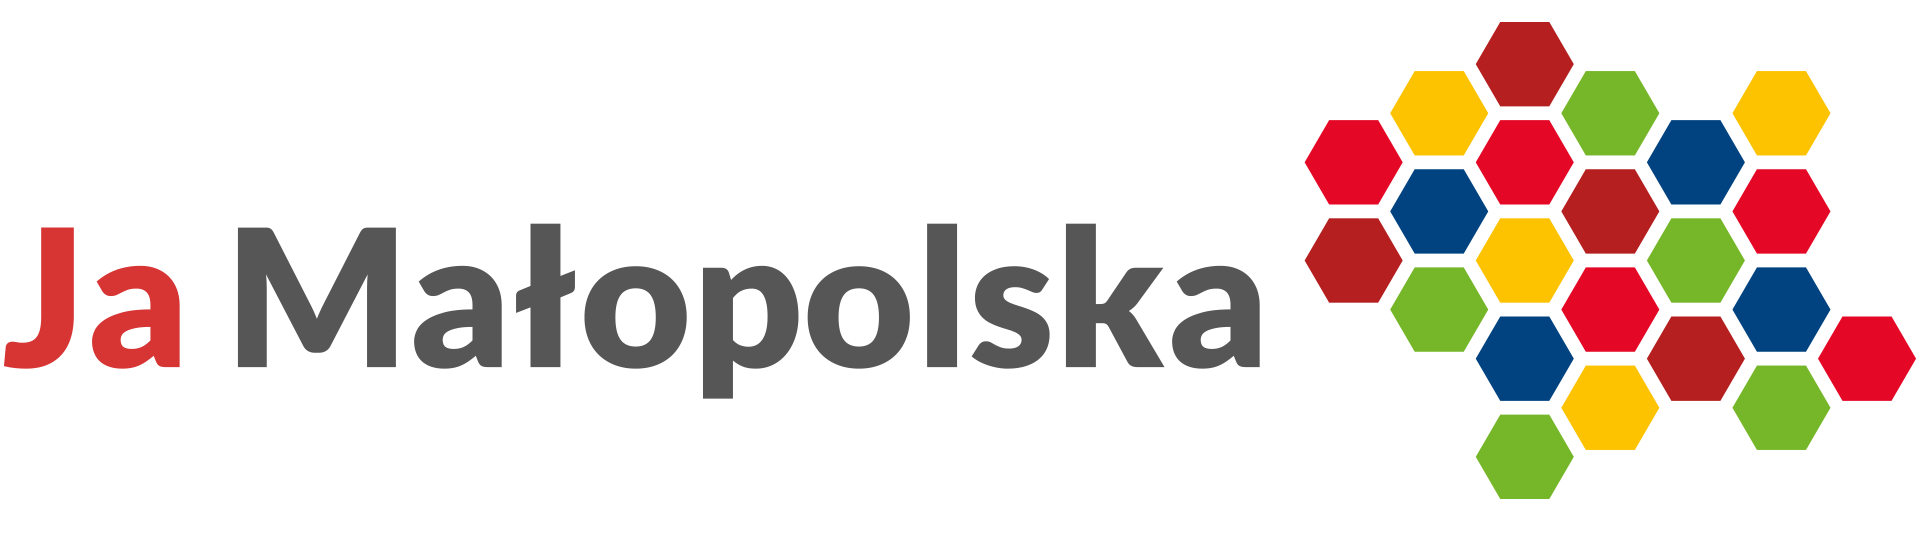 ja-malopolska-logo